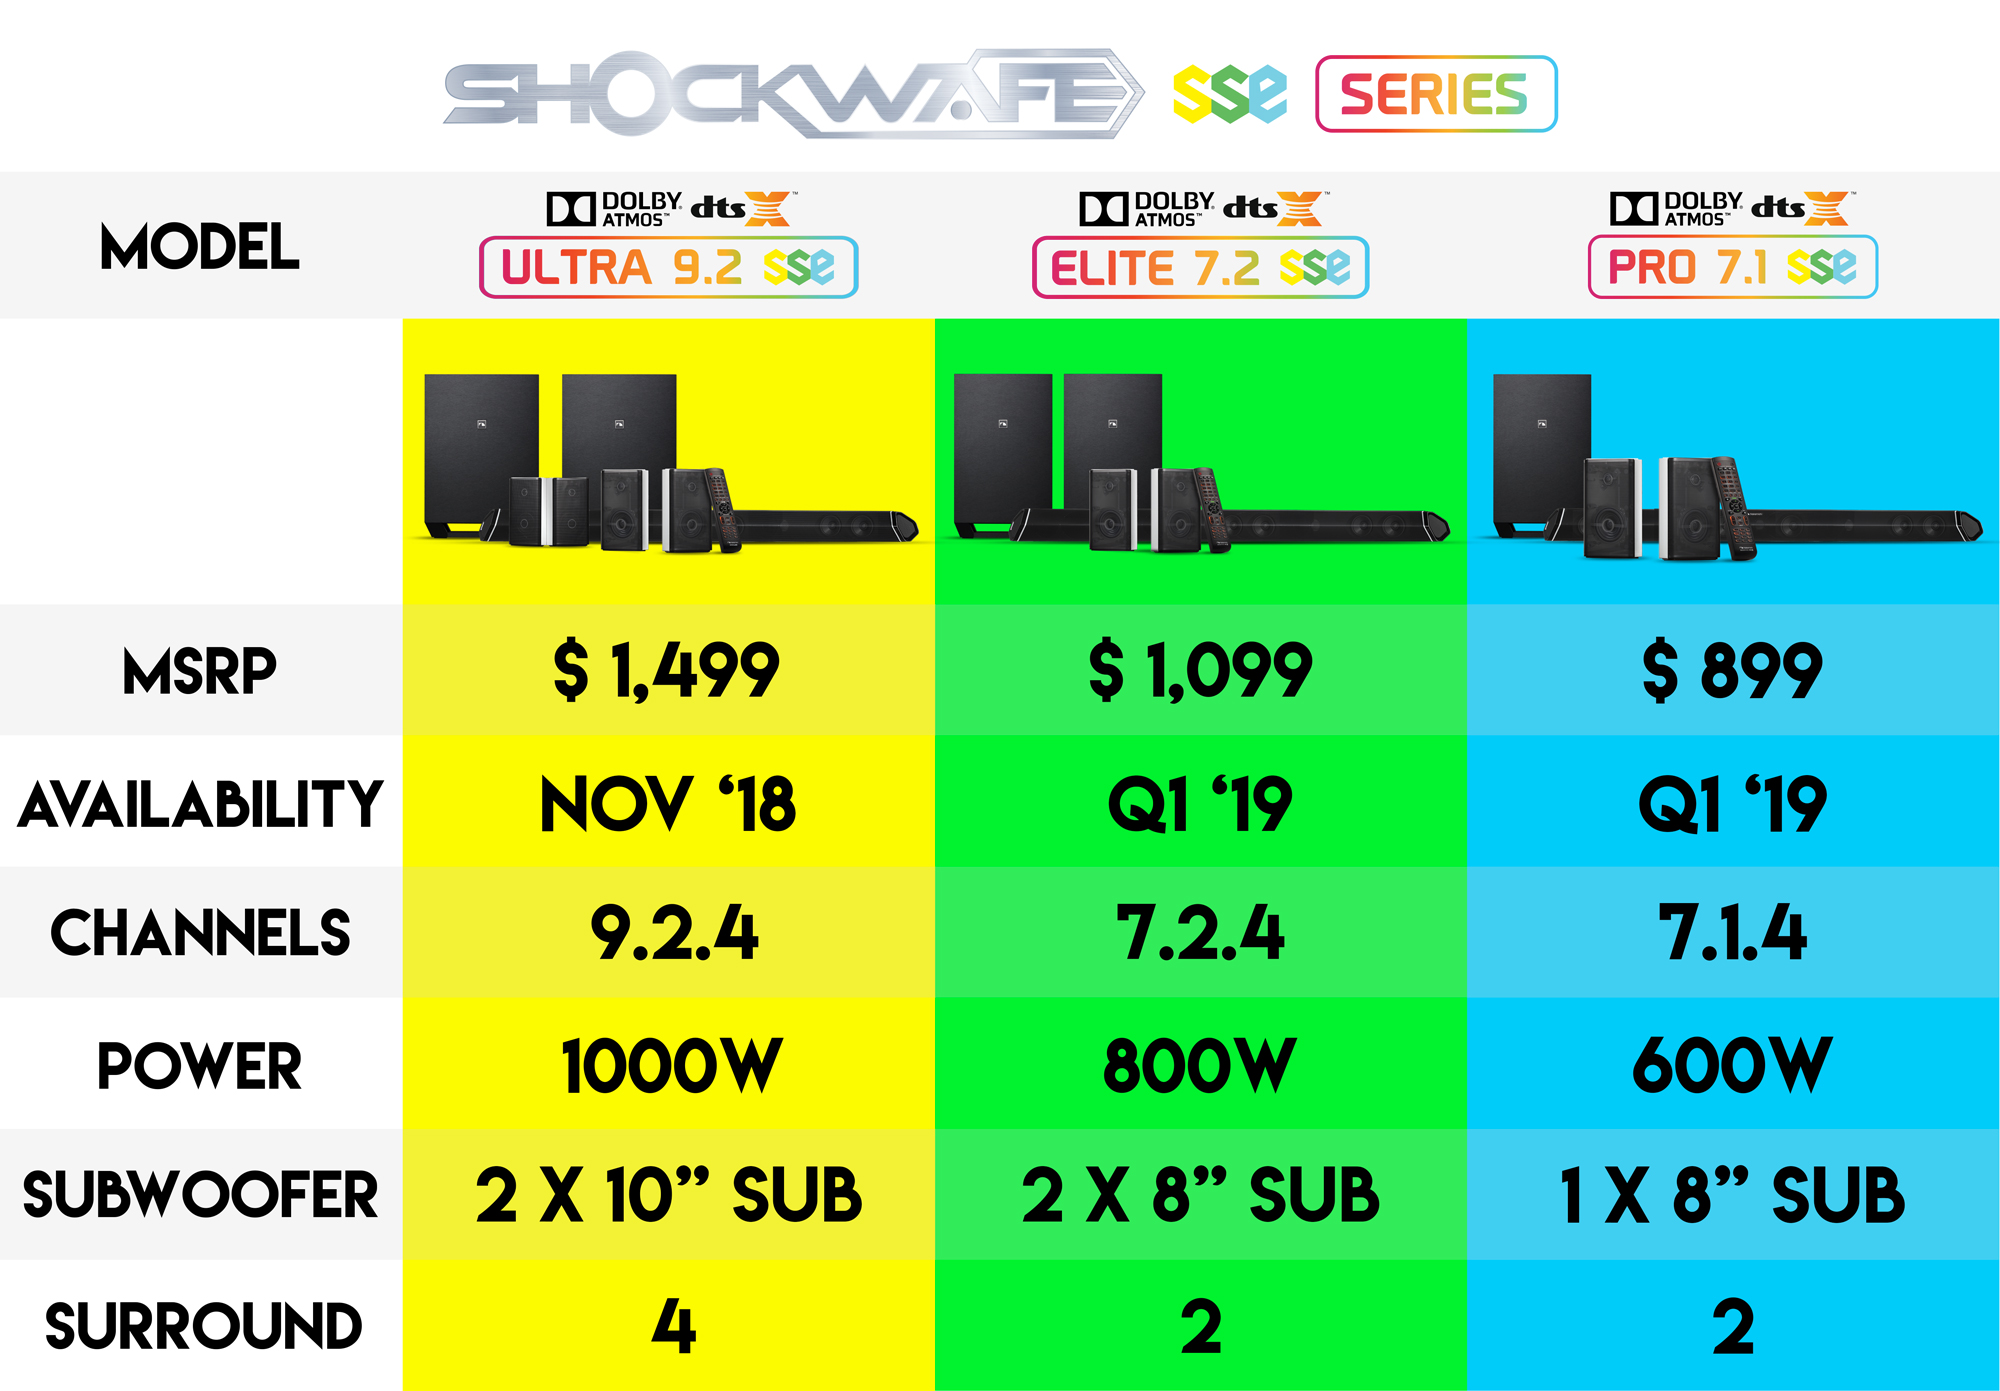 Nakamichi Shockwafe SSE Soundbars Comparison Chart and Available Dates